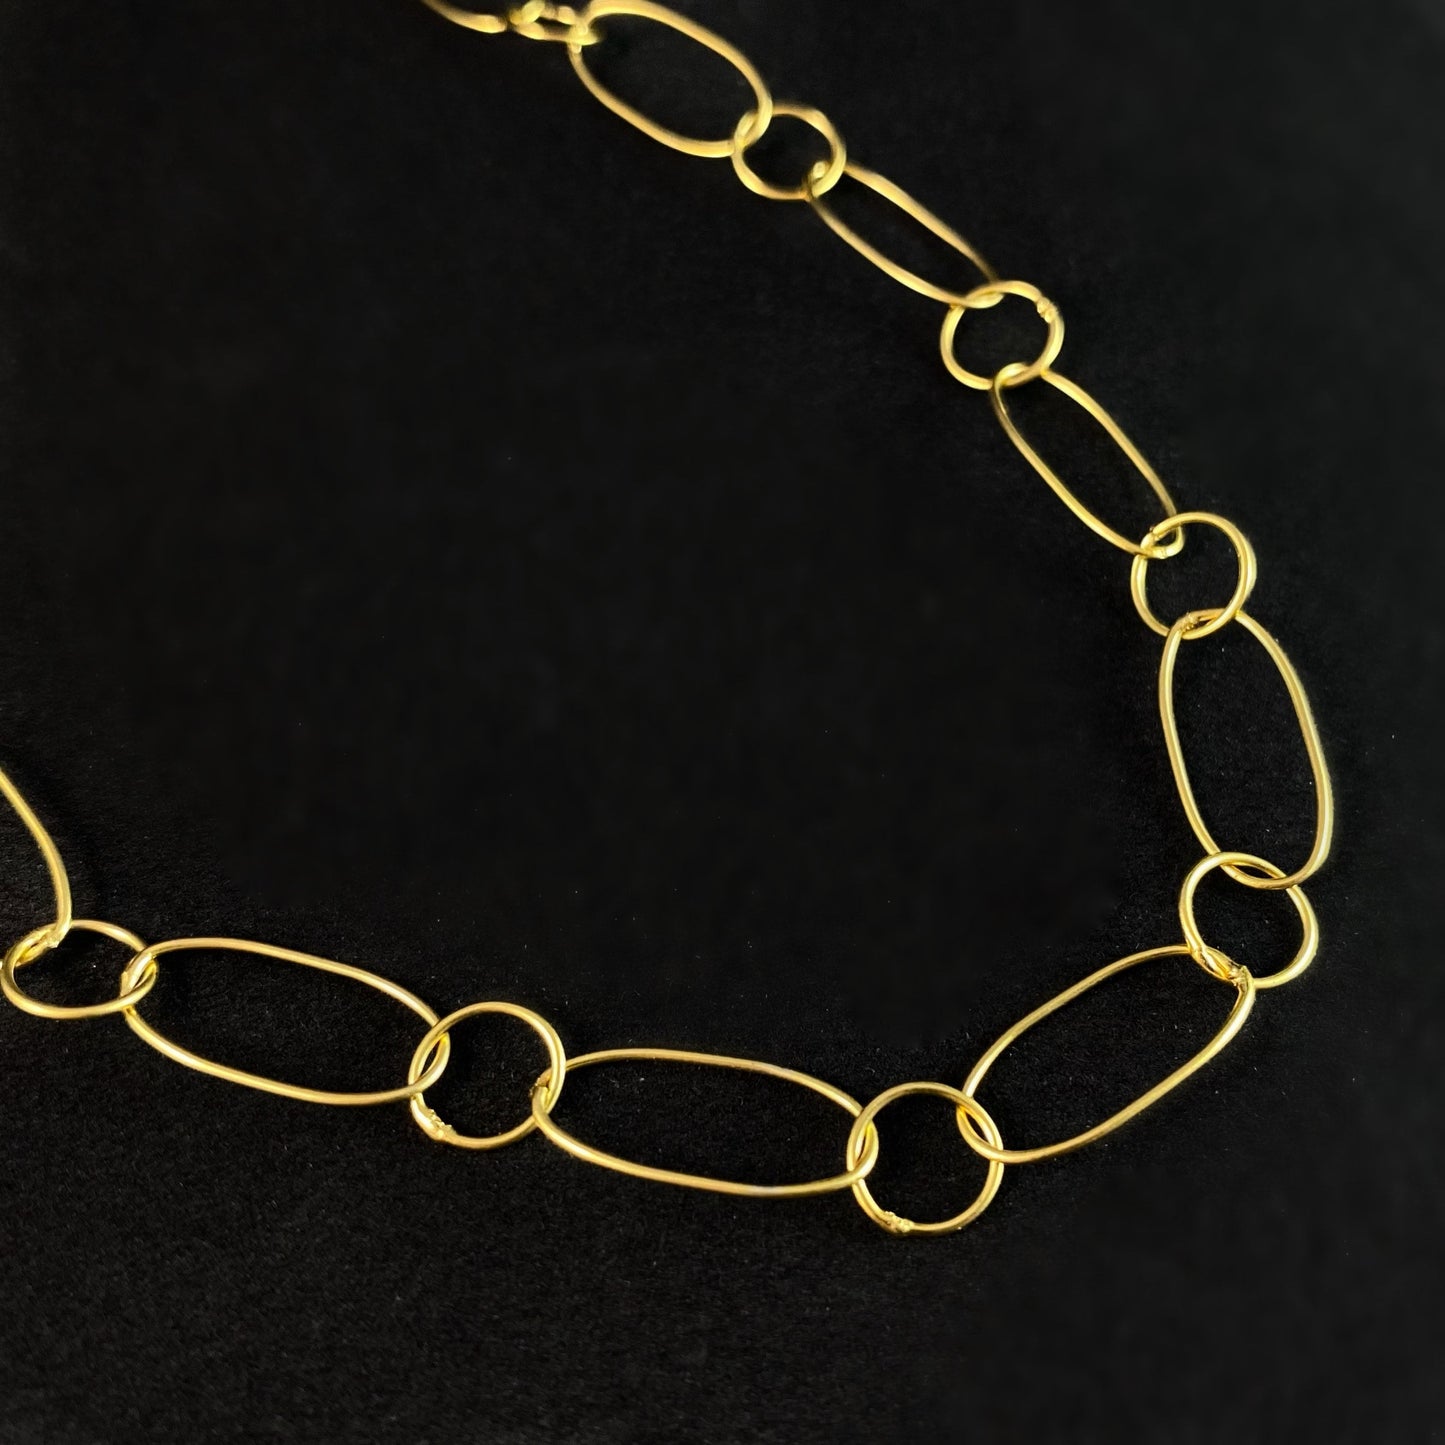 Delicate Gold Chain Necklace - La Vie Parisienne by Catherine Popesco